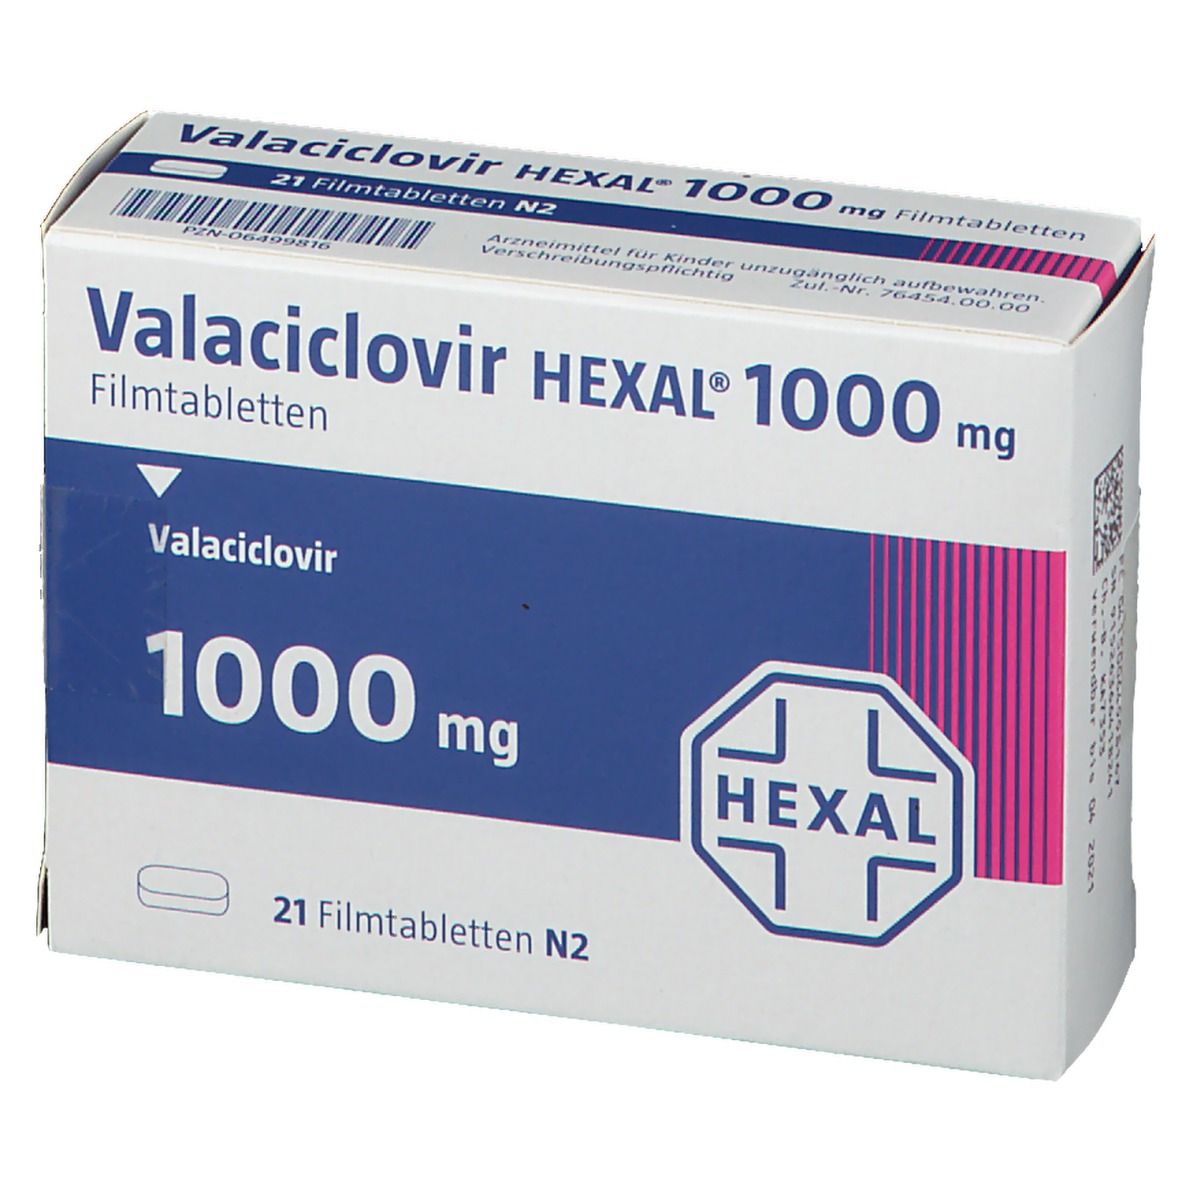 Valaciclovir HEXAL® 1000 mg